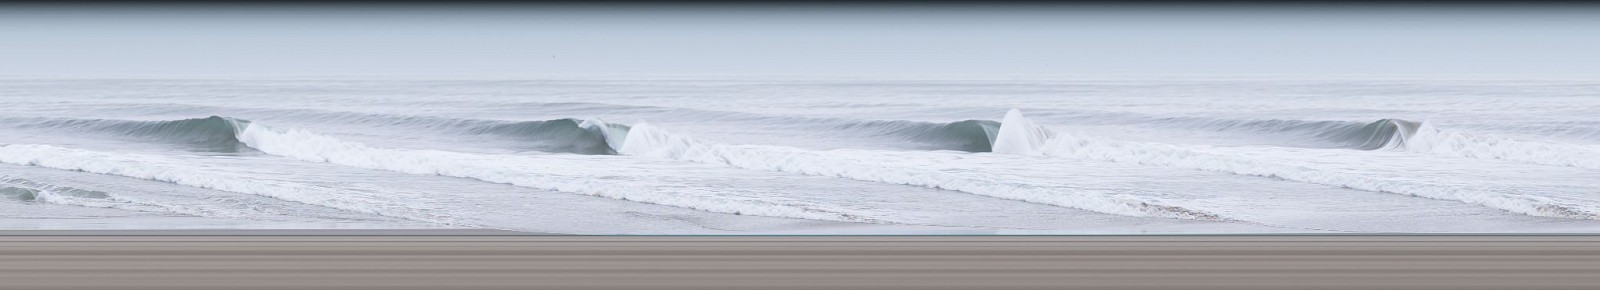 Jay Mark Johnson, VENICE BEACH WAVES #3, 2006 Venice Beach CA
archival pigment on paper, mounted on aluminum, 40 x 220 in. (101.6 x 558.8 cm)